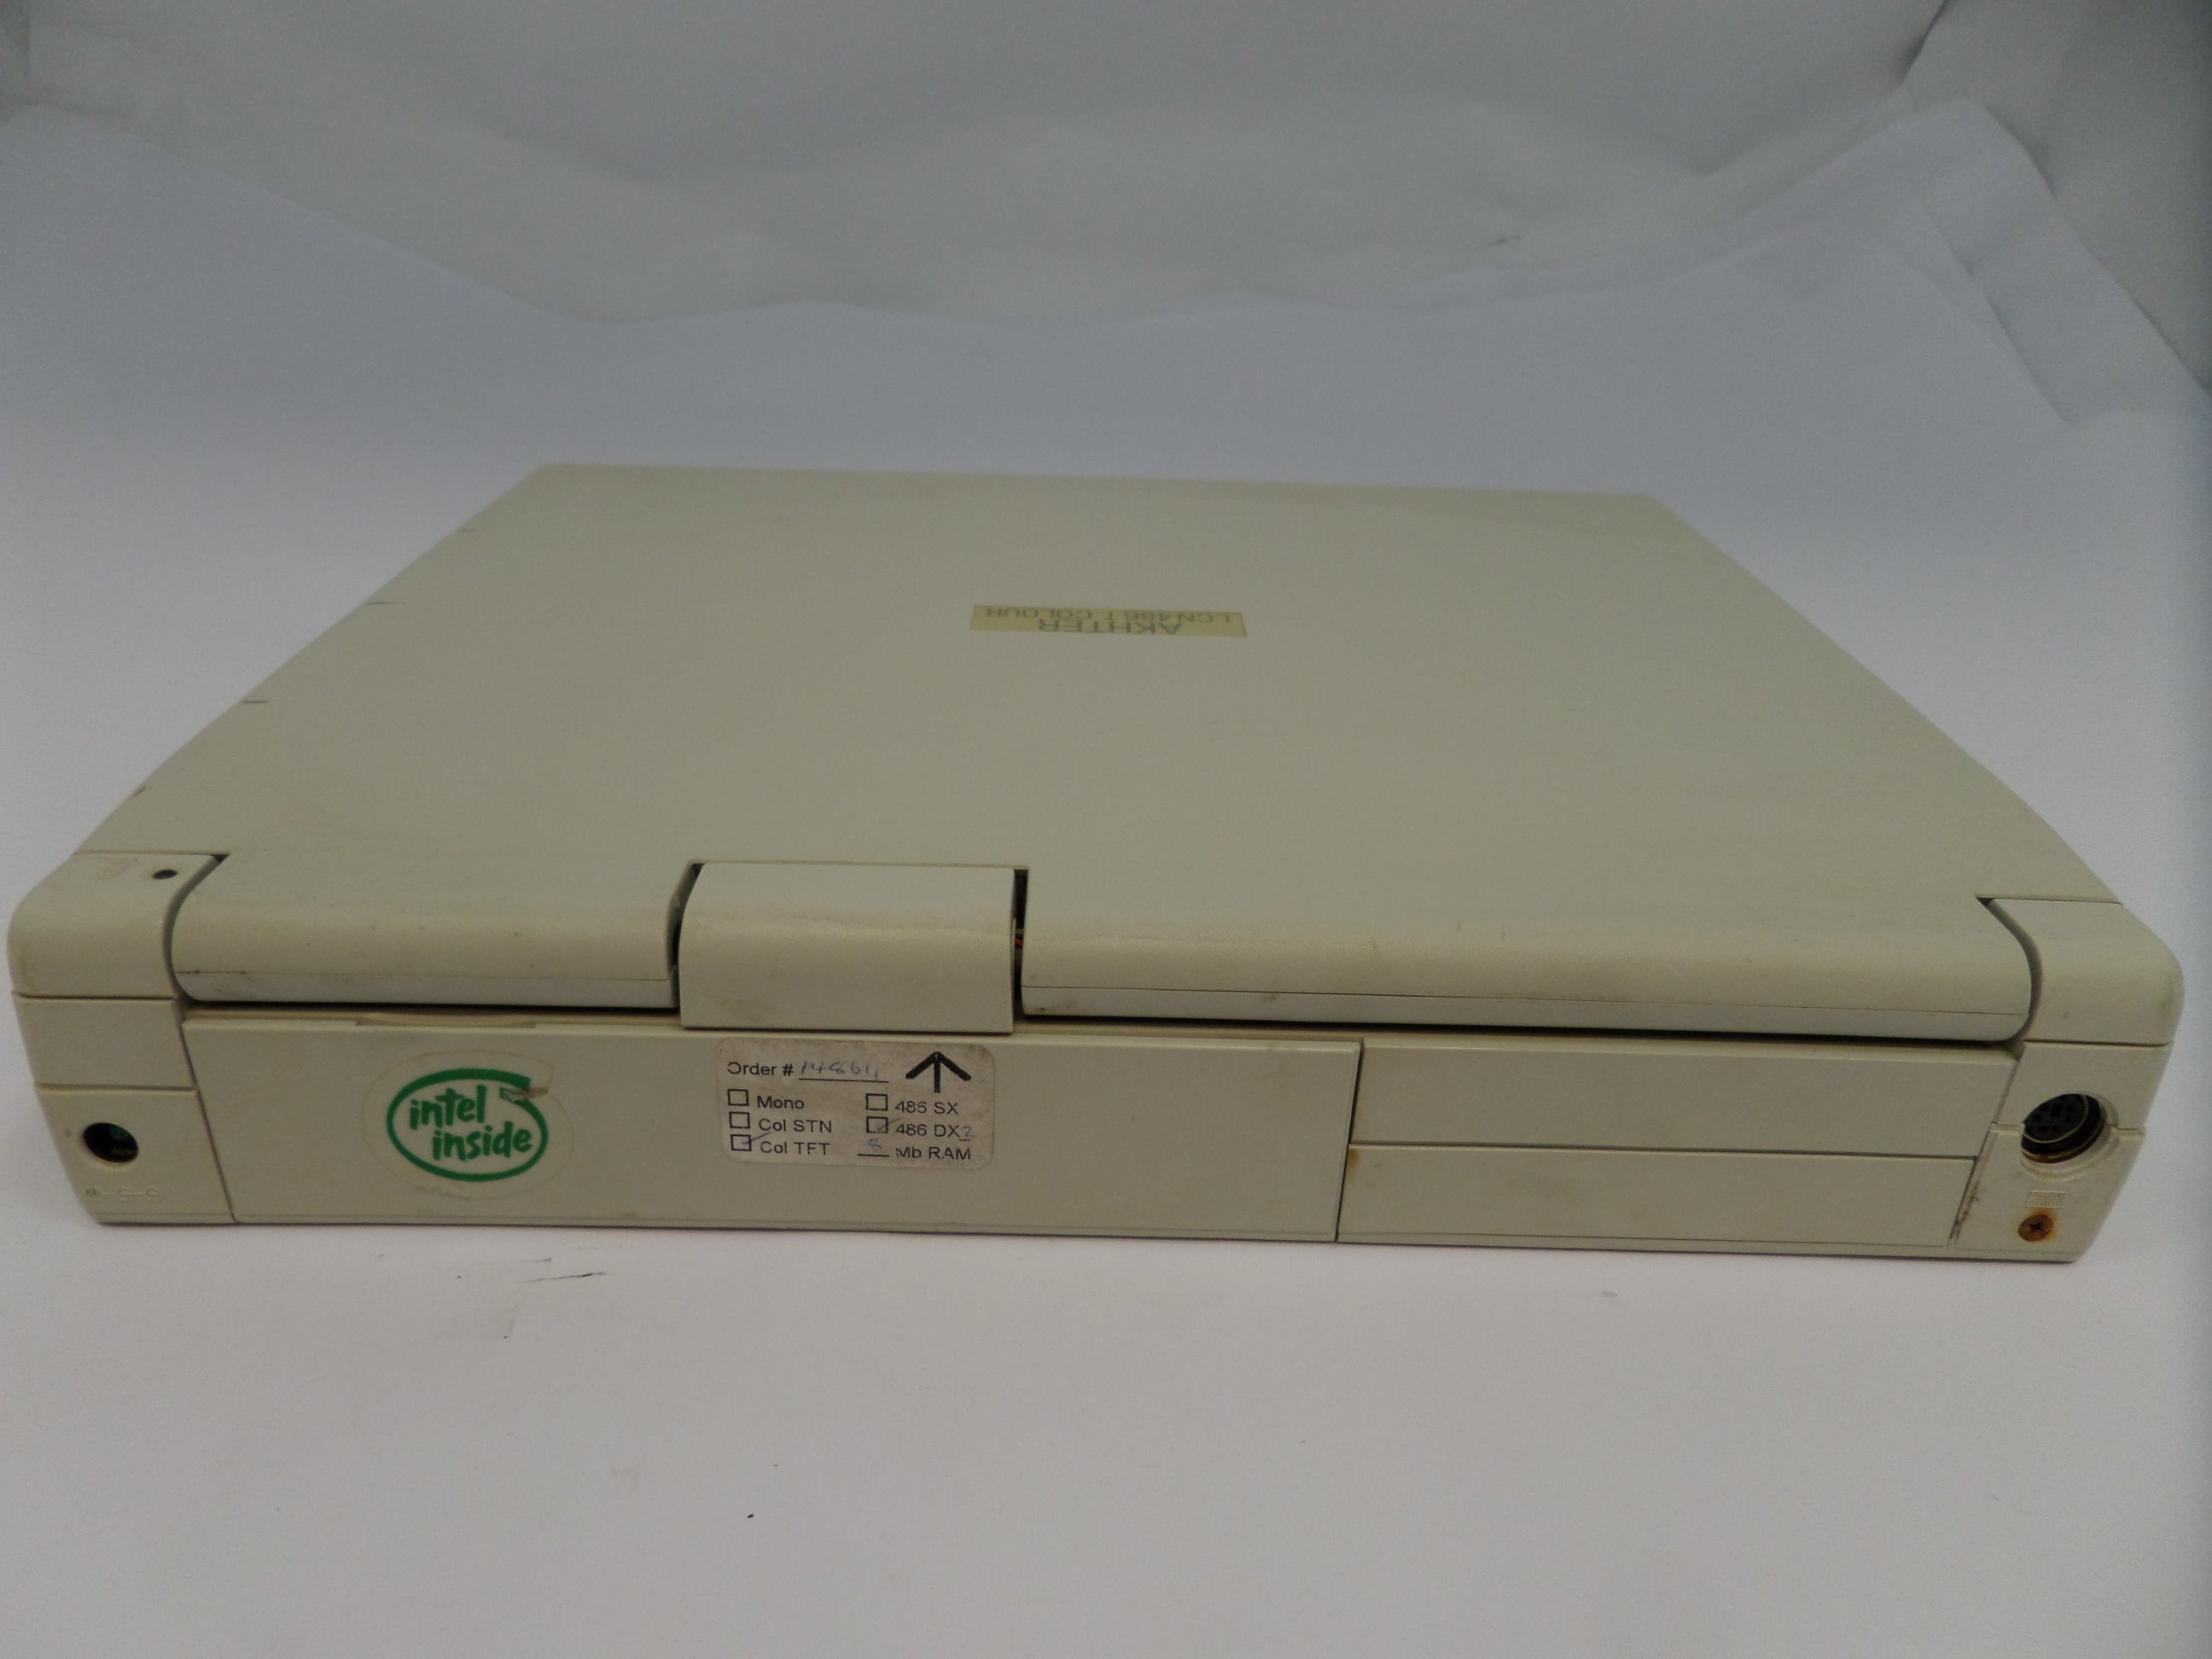 PR02089_LCN486T_Akhter LCN-486T Colour Laptop - Image9